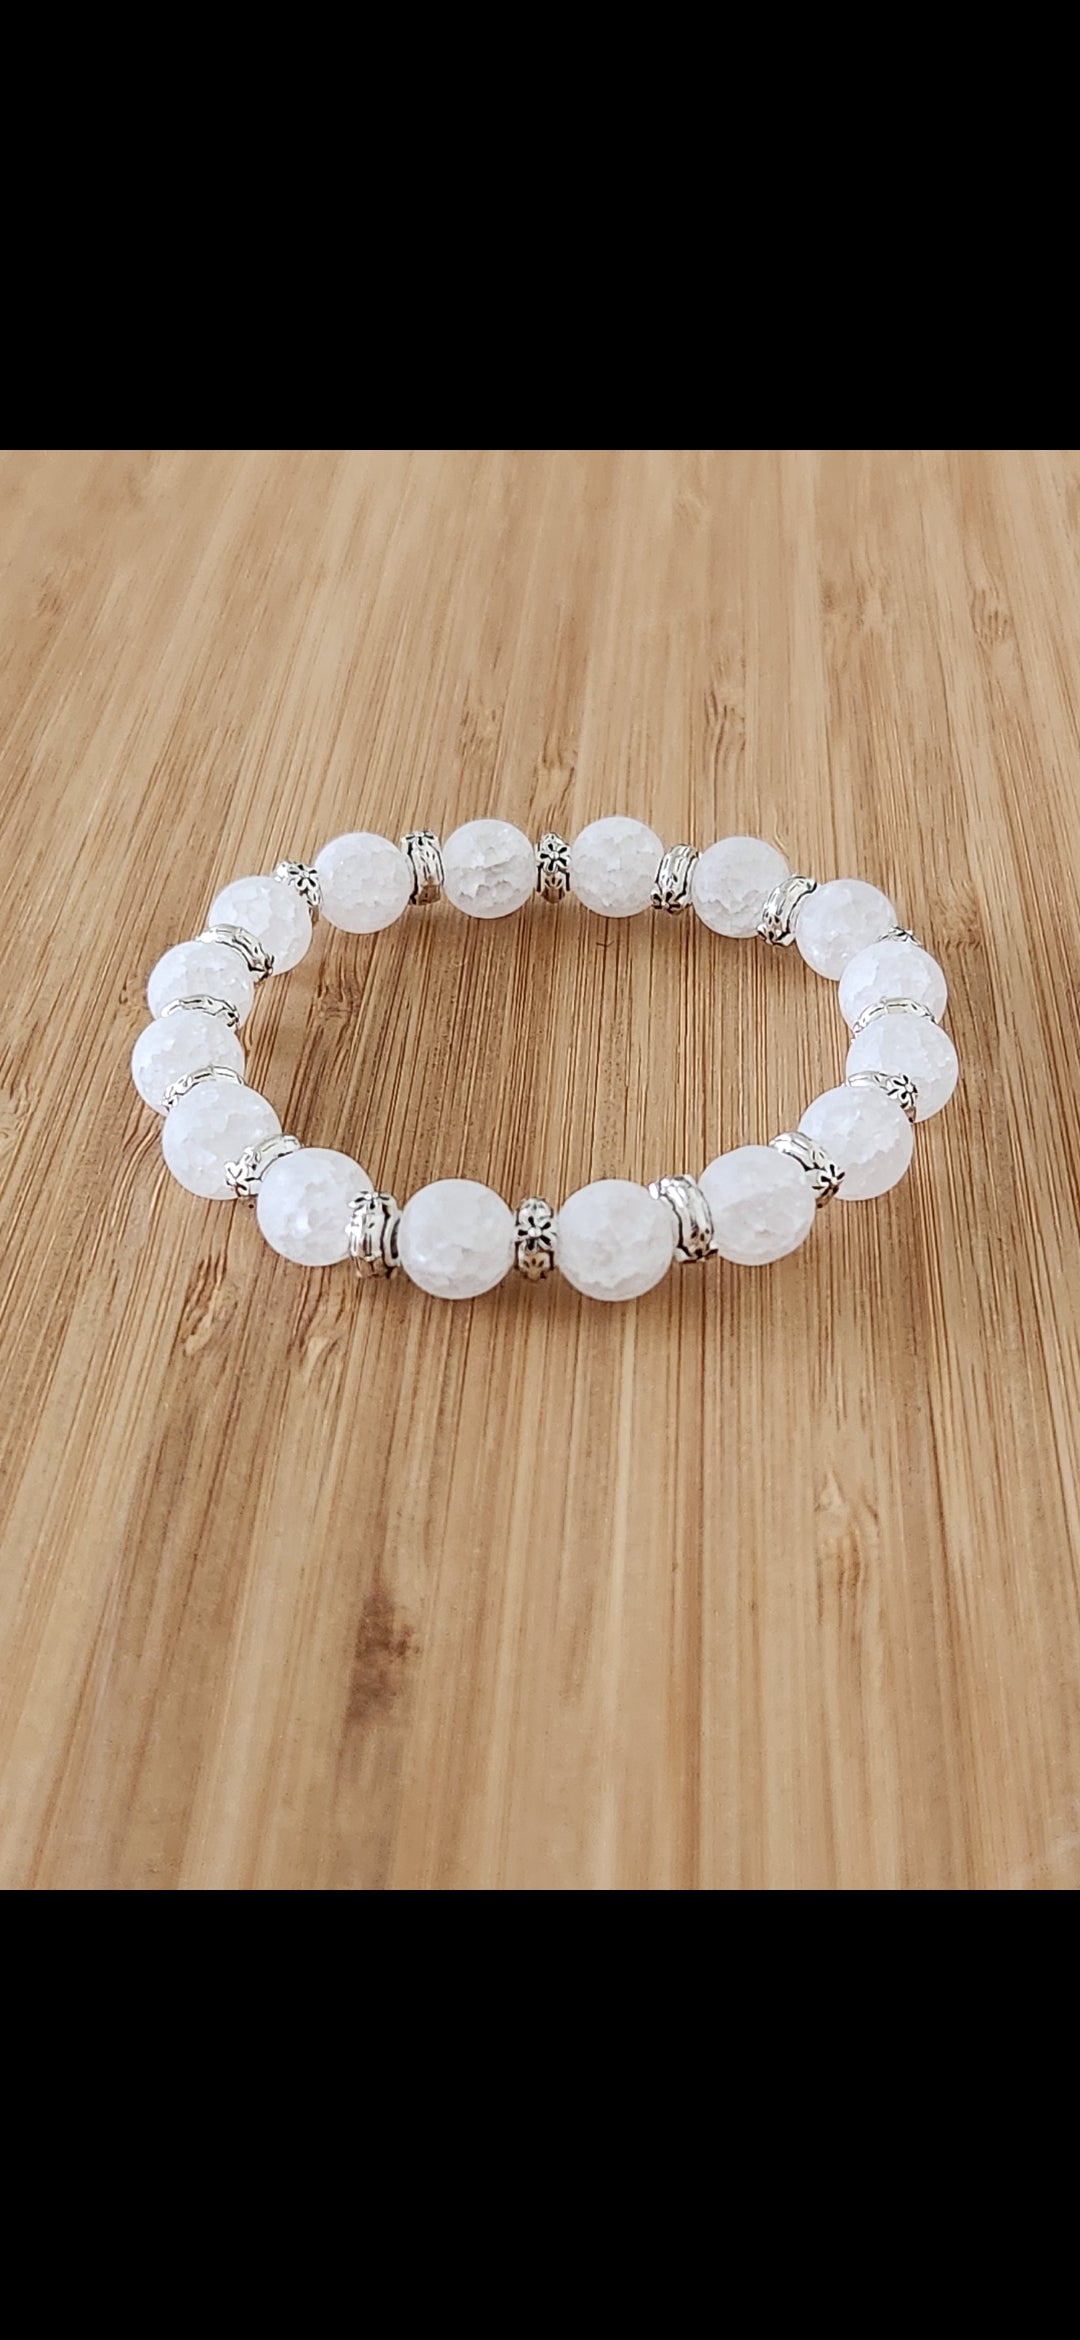 White Crackle Quartz Stone beaded bracelet with accents - harmony - spiritual light - wisdom - growth